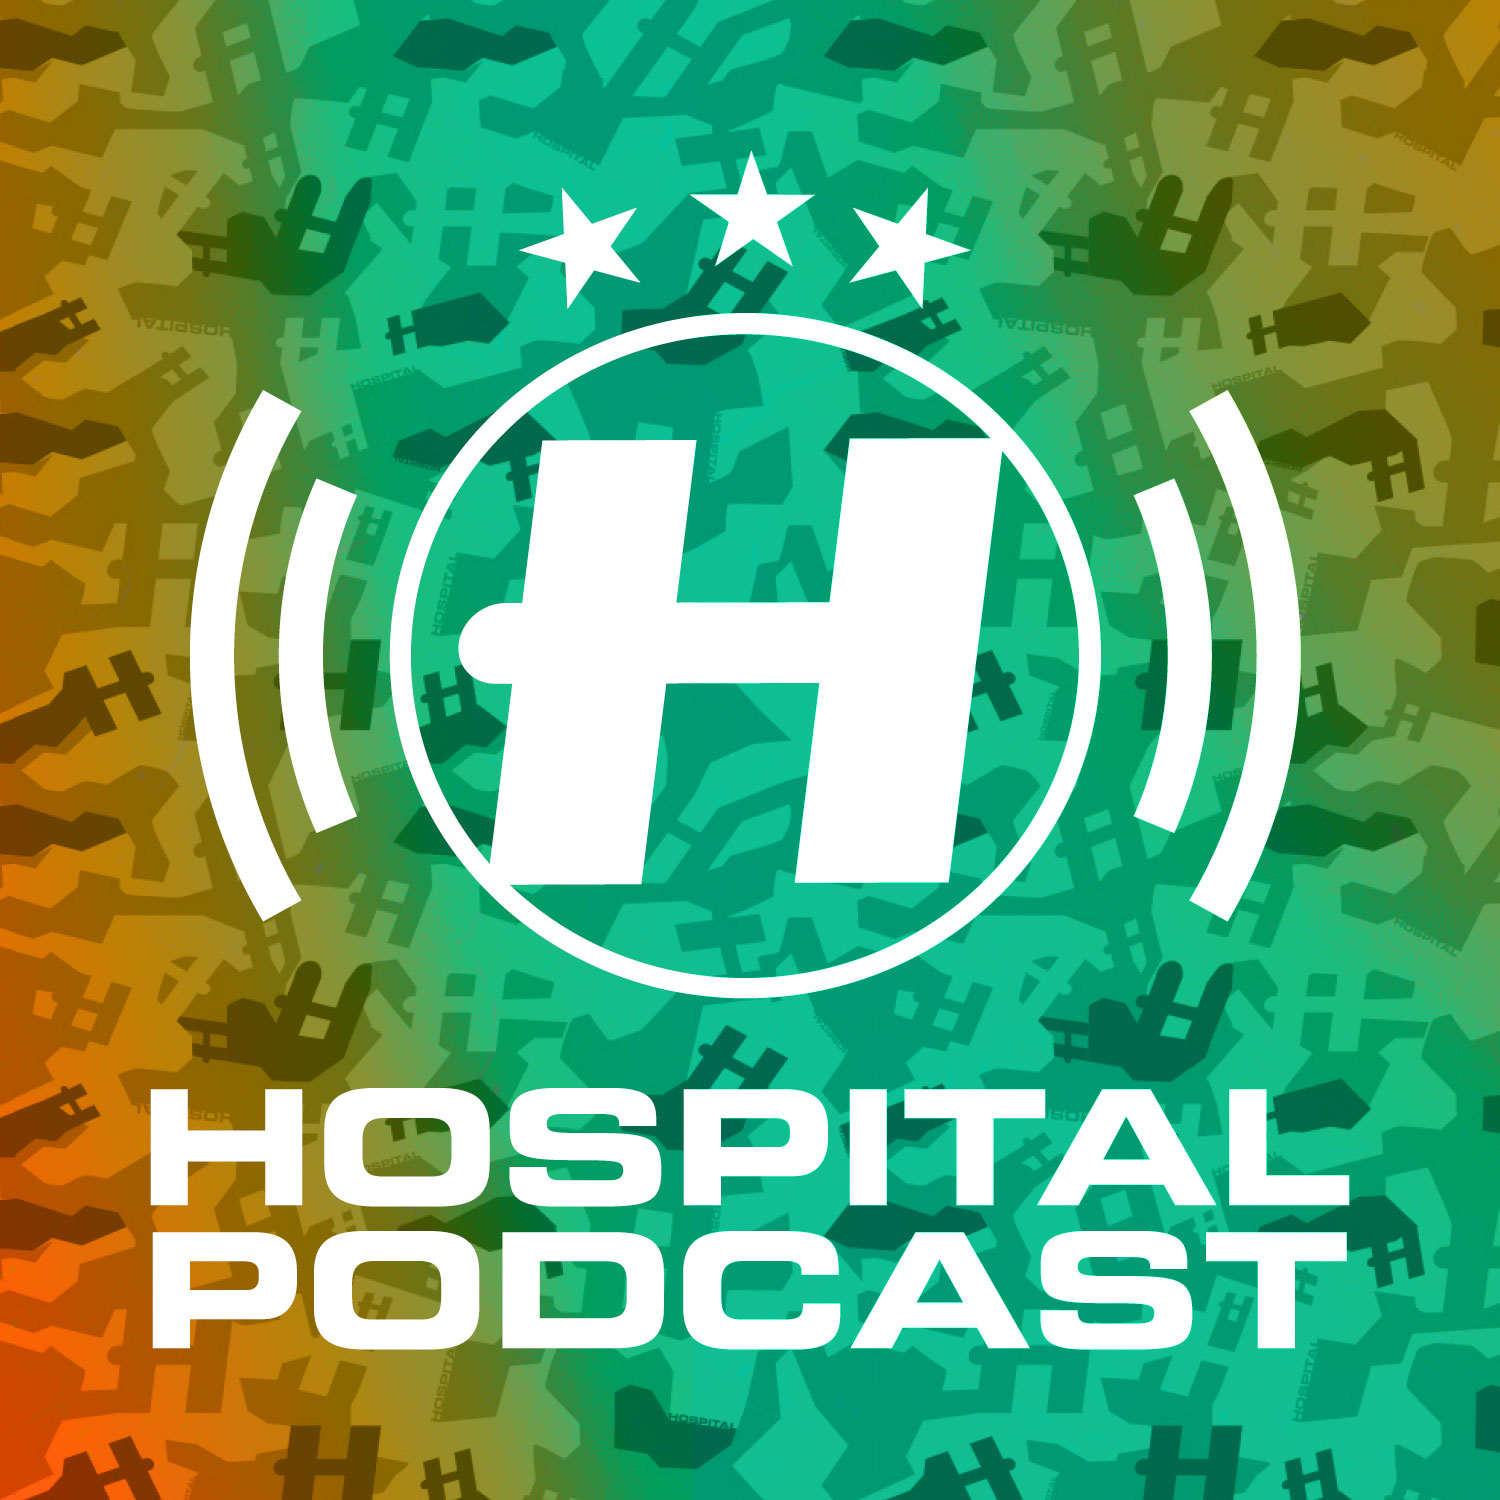 Hospital Podcast 383 with London Elektricity Artwork